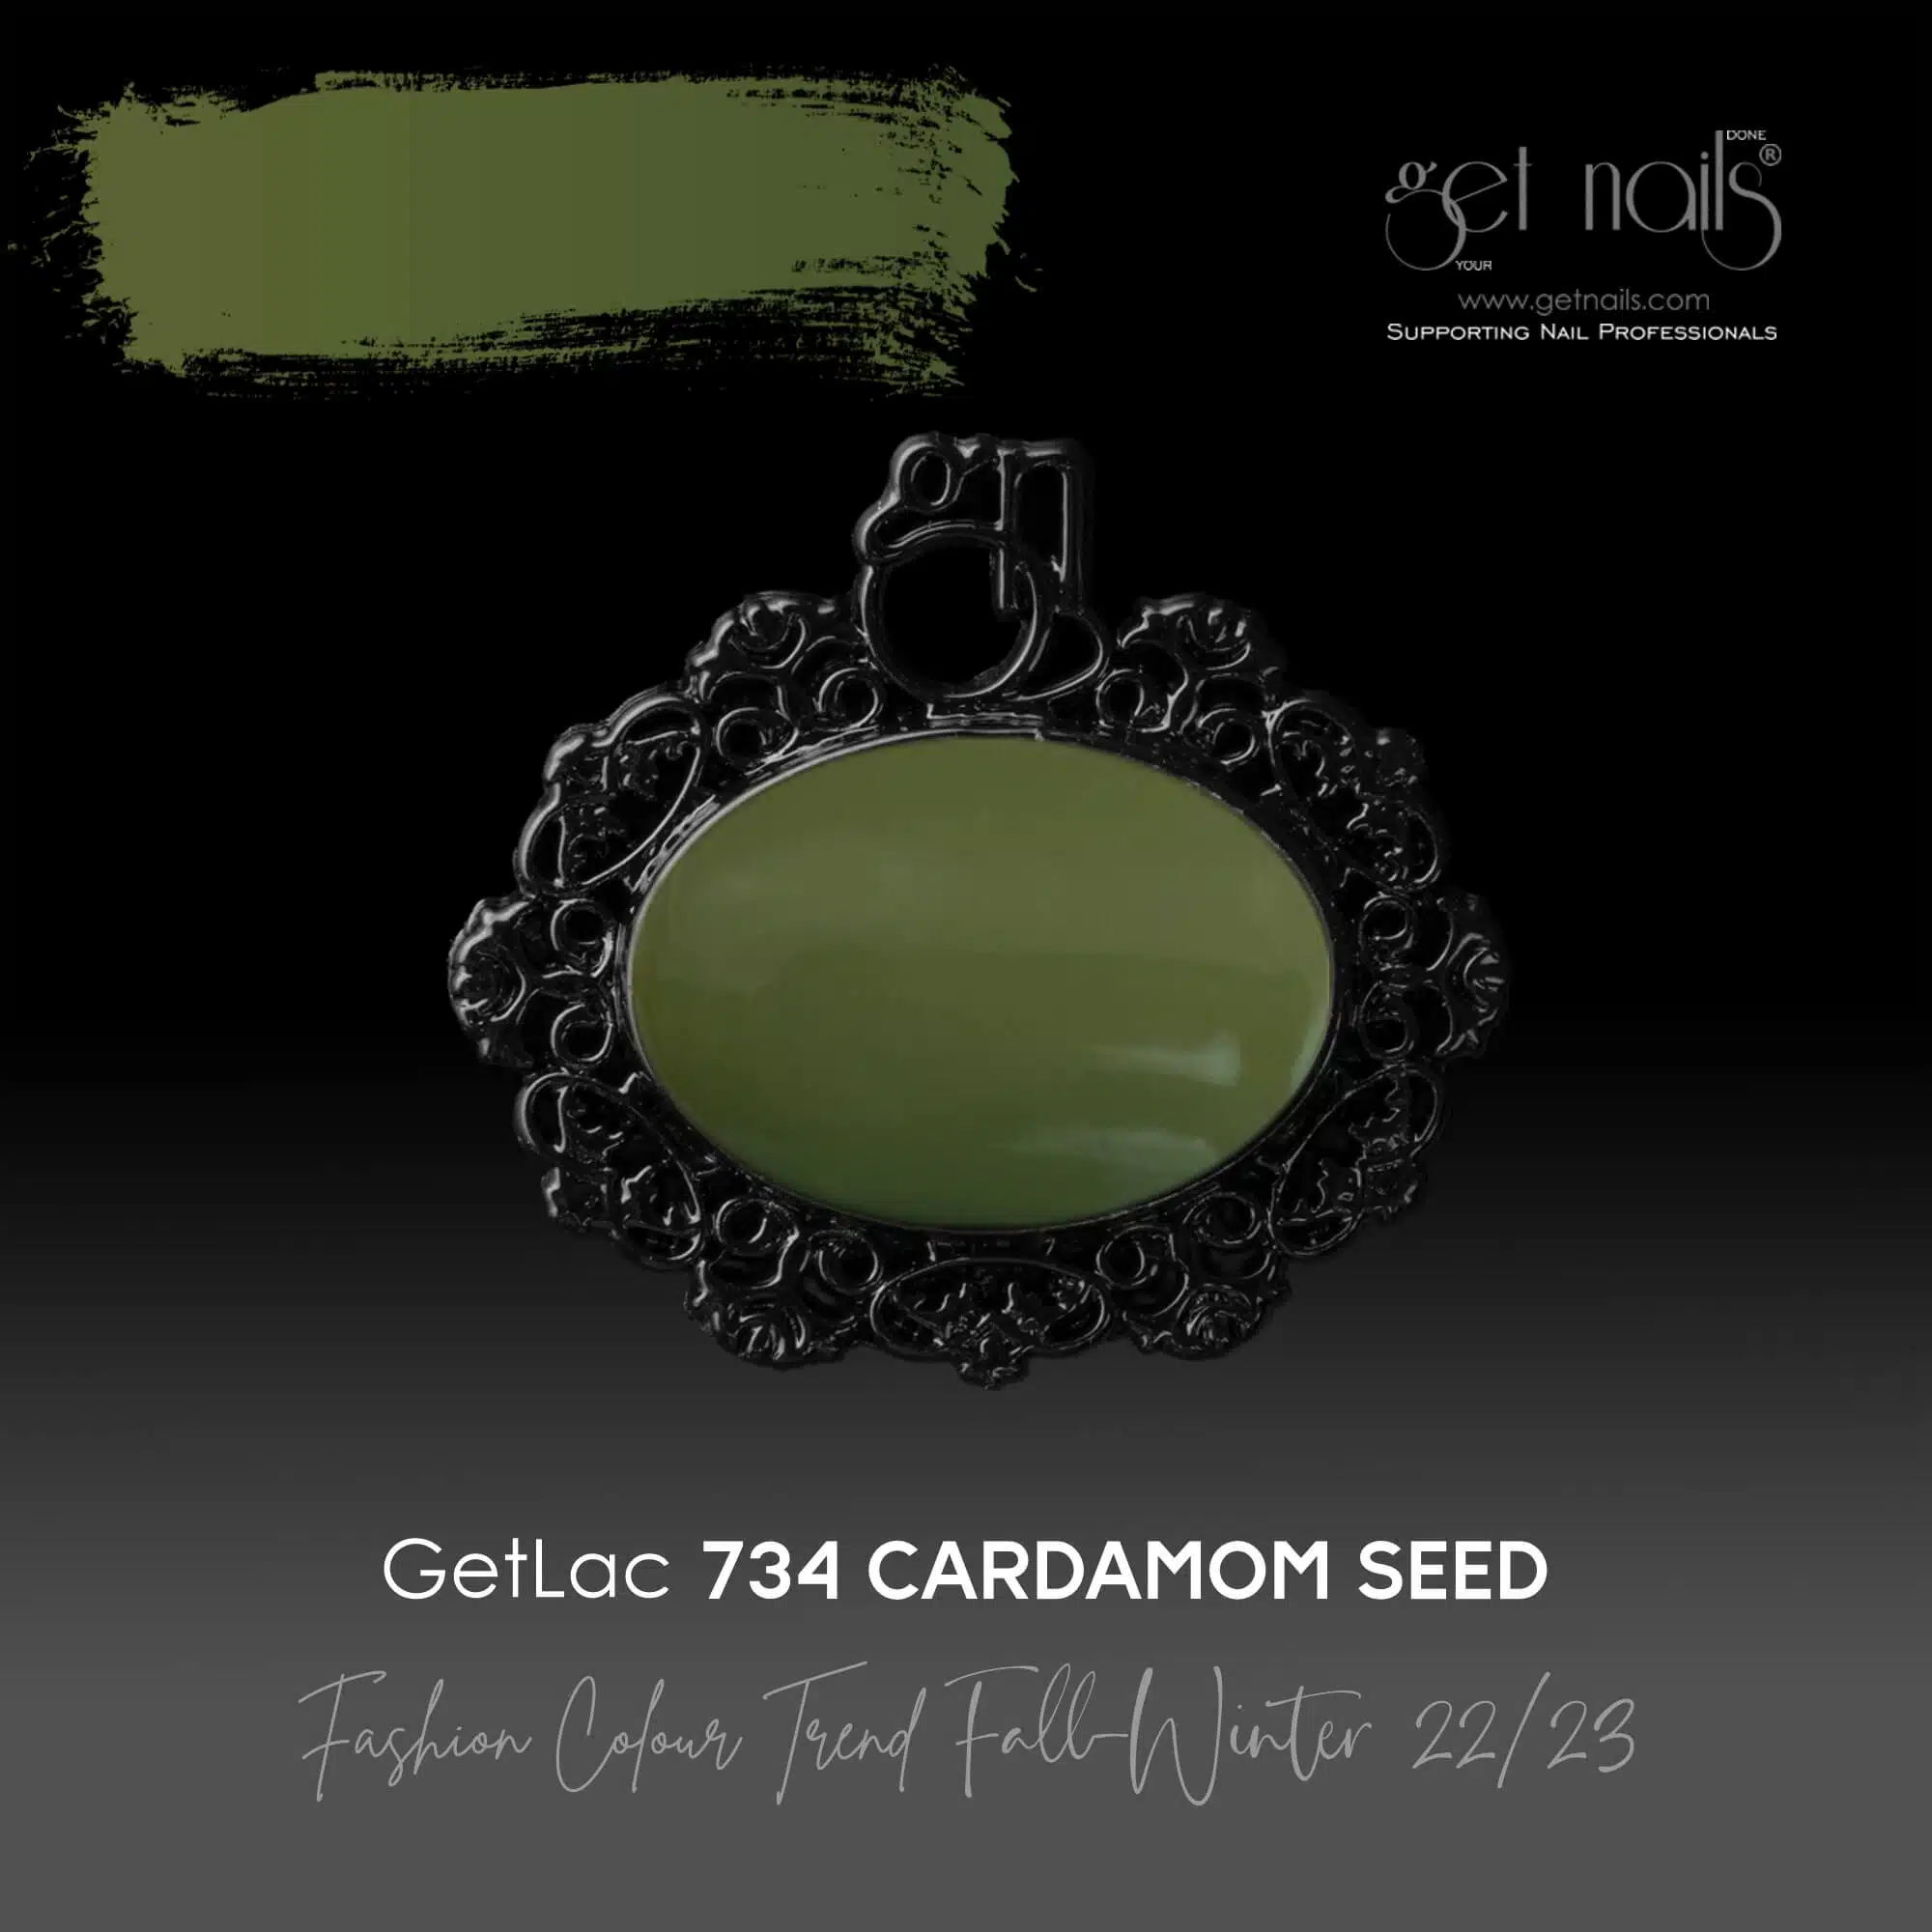 Get Nails Austria - GetLac 734 semi di cardamomo 15g